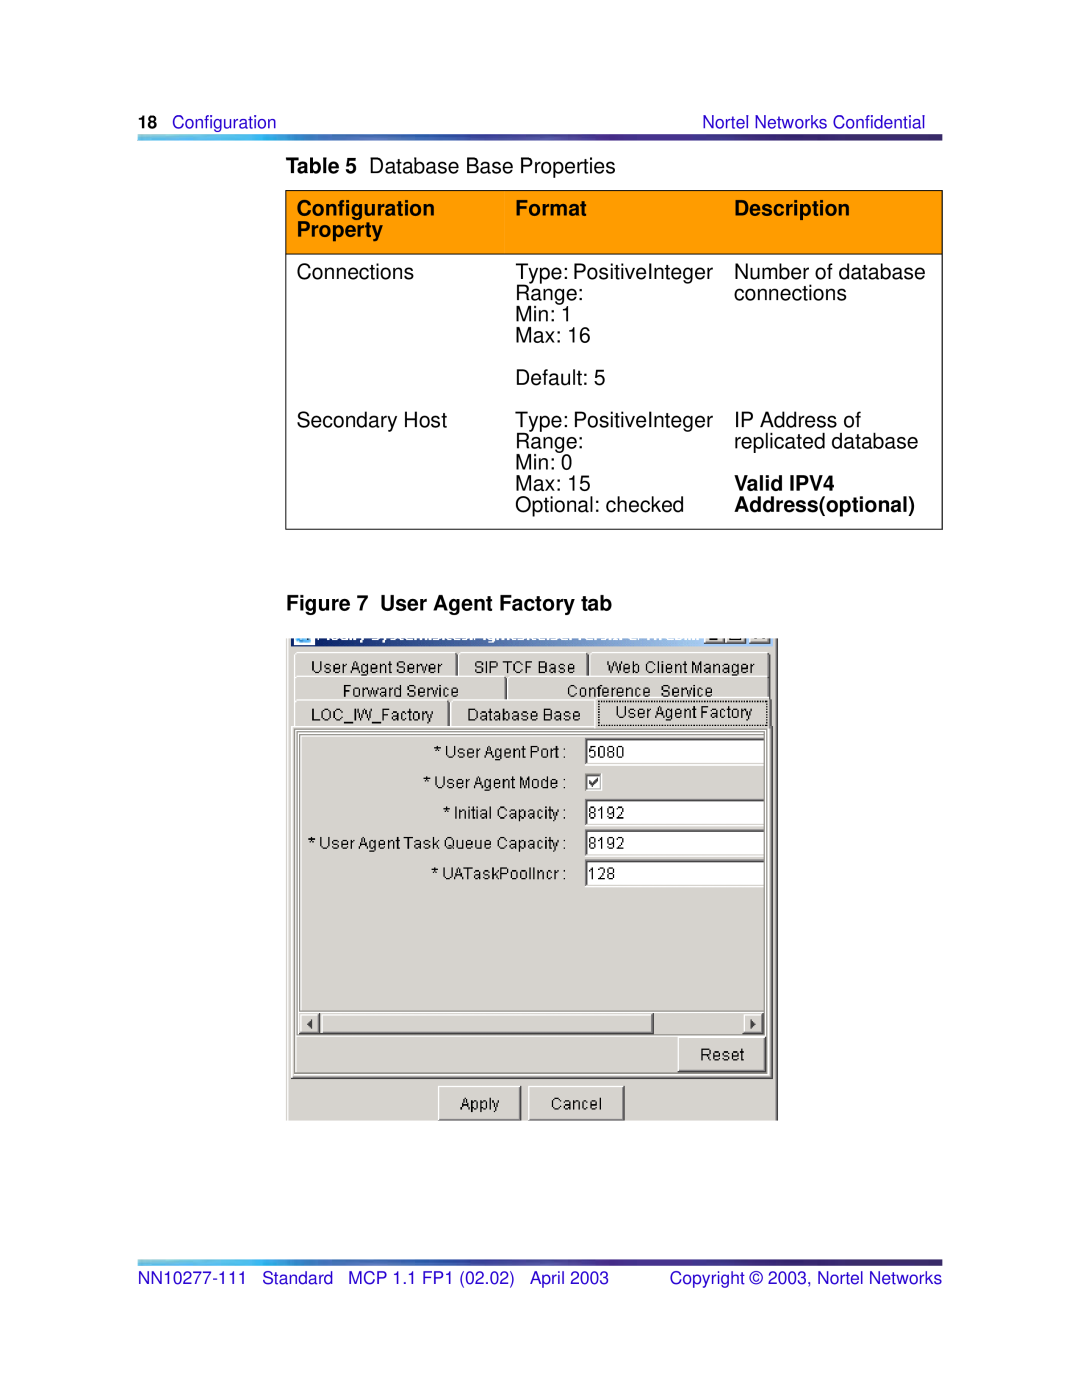 Nortel Networks NN10277-111 manual Valid IPV4, Addressoptional, User Agent Factory tab, Configuration, Format, Description 